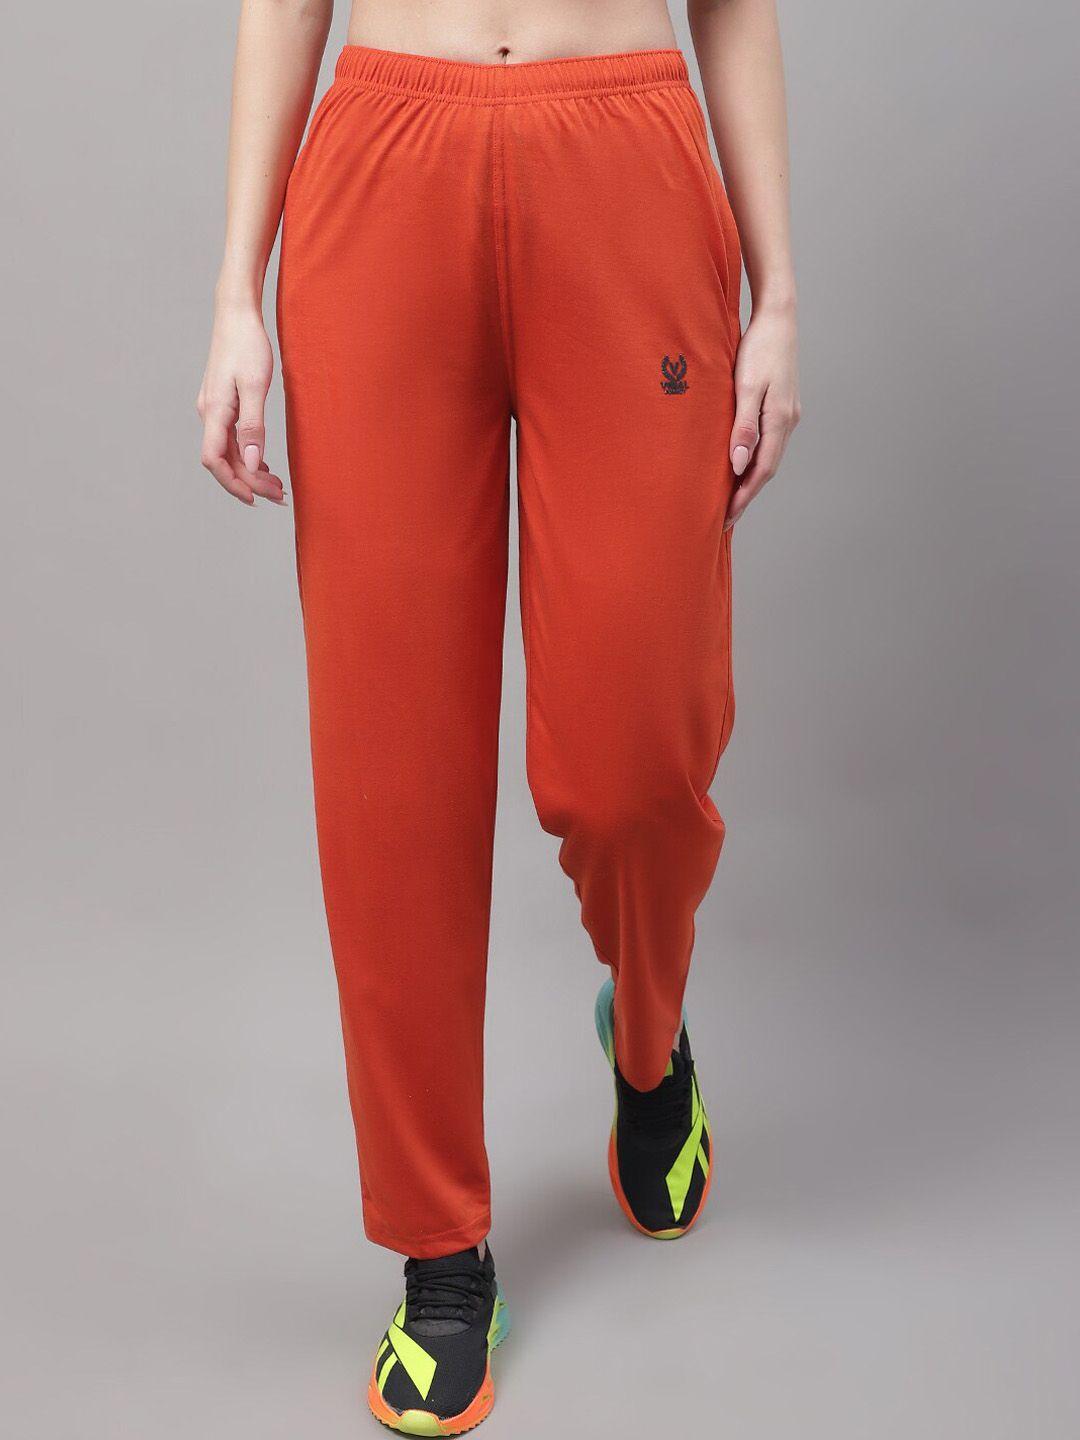 vimal-jonney-women-cotton-sports-track-pants